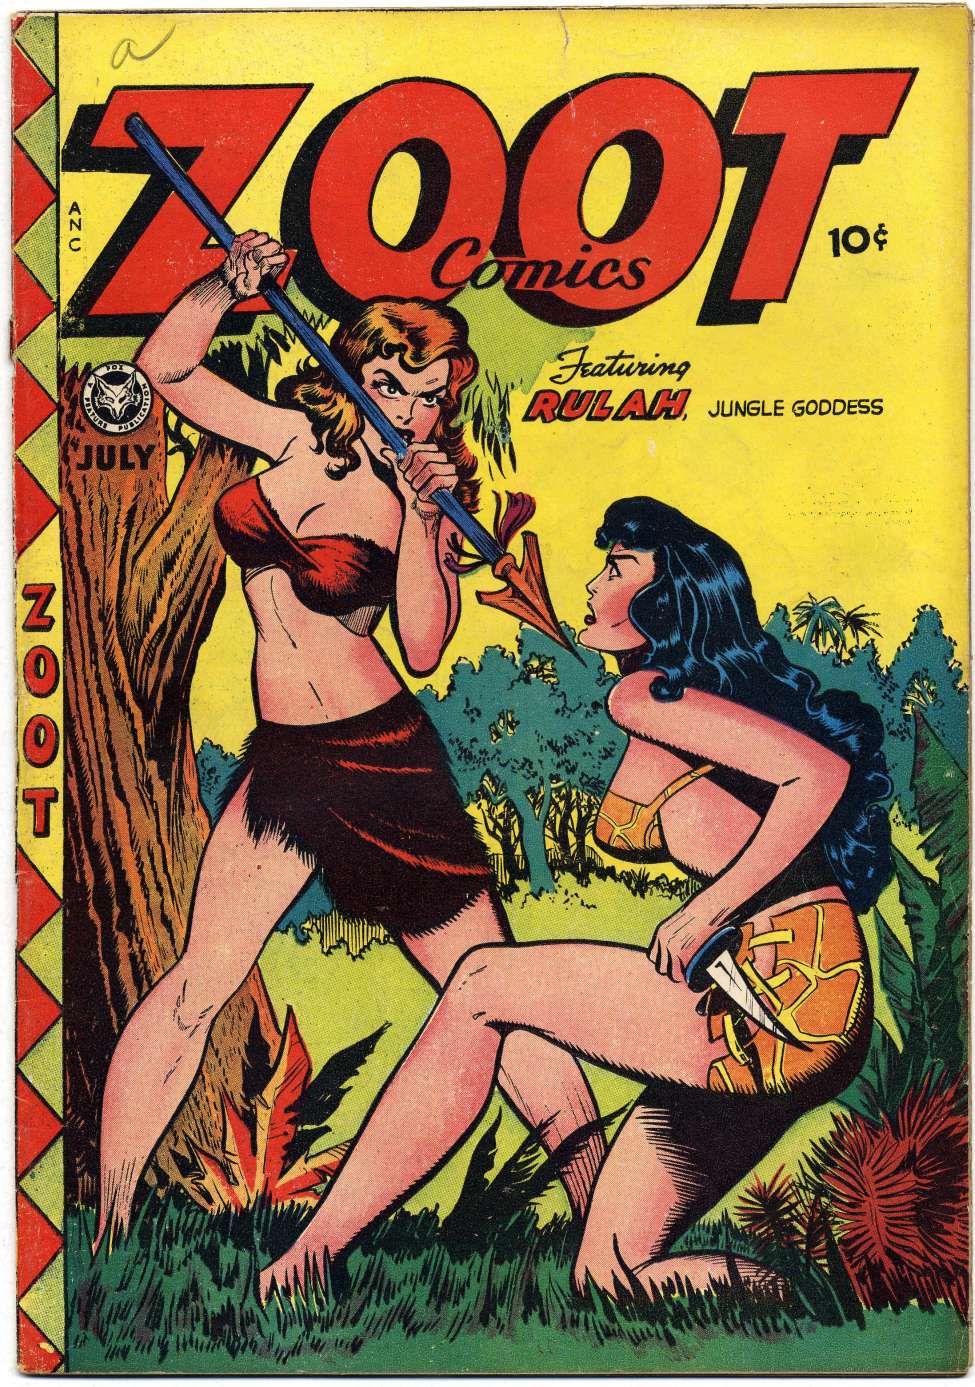 Image result for bikini comic cover